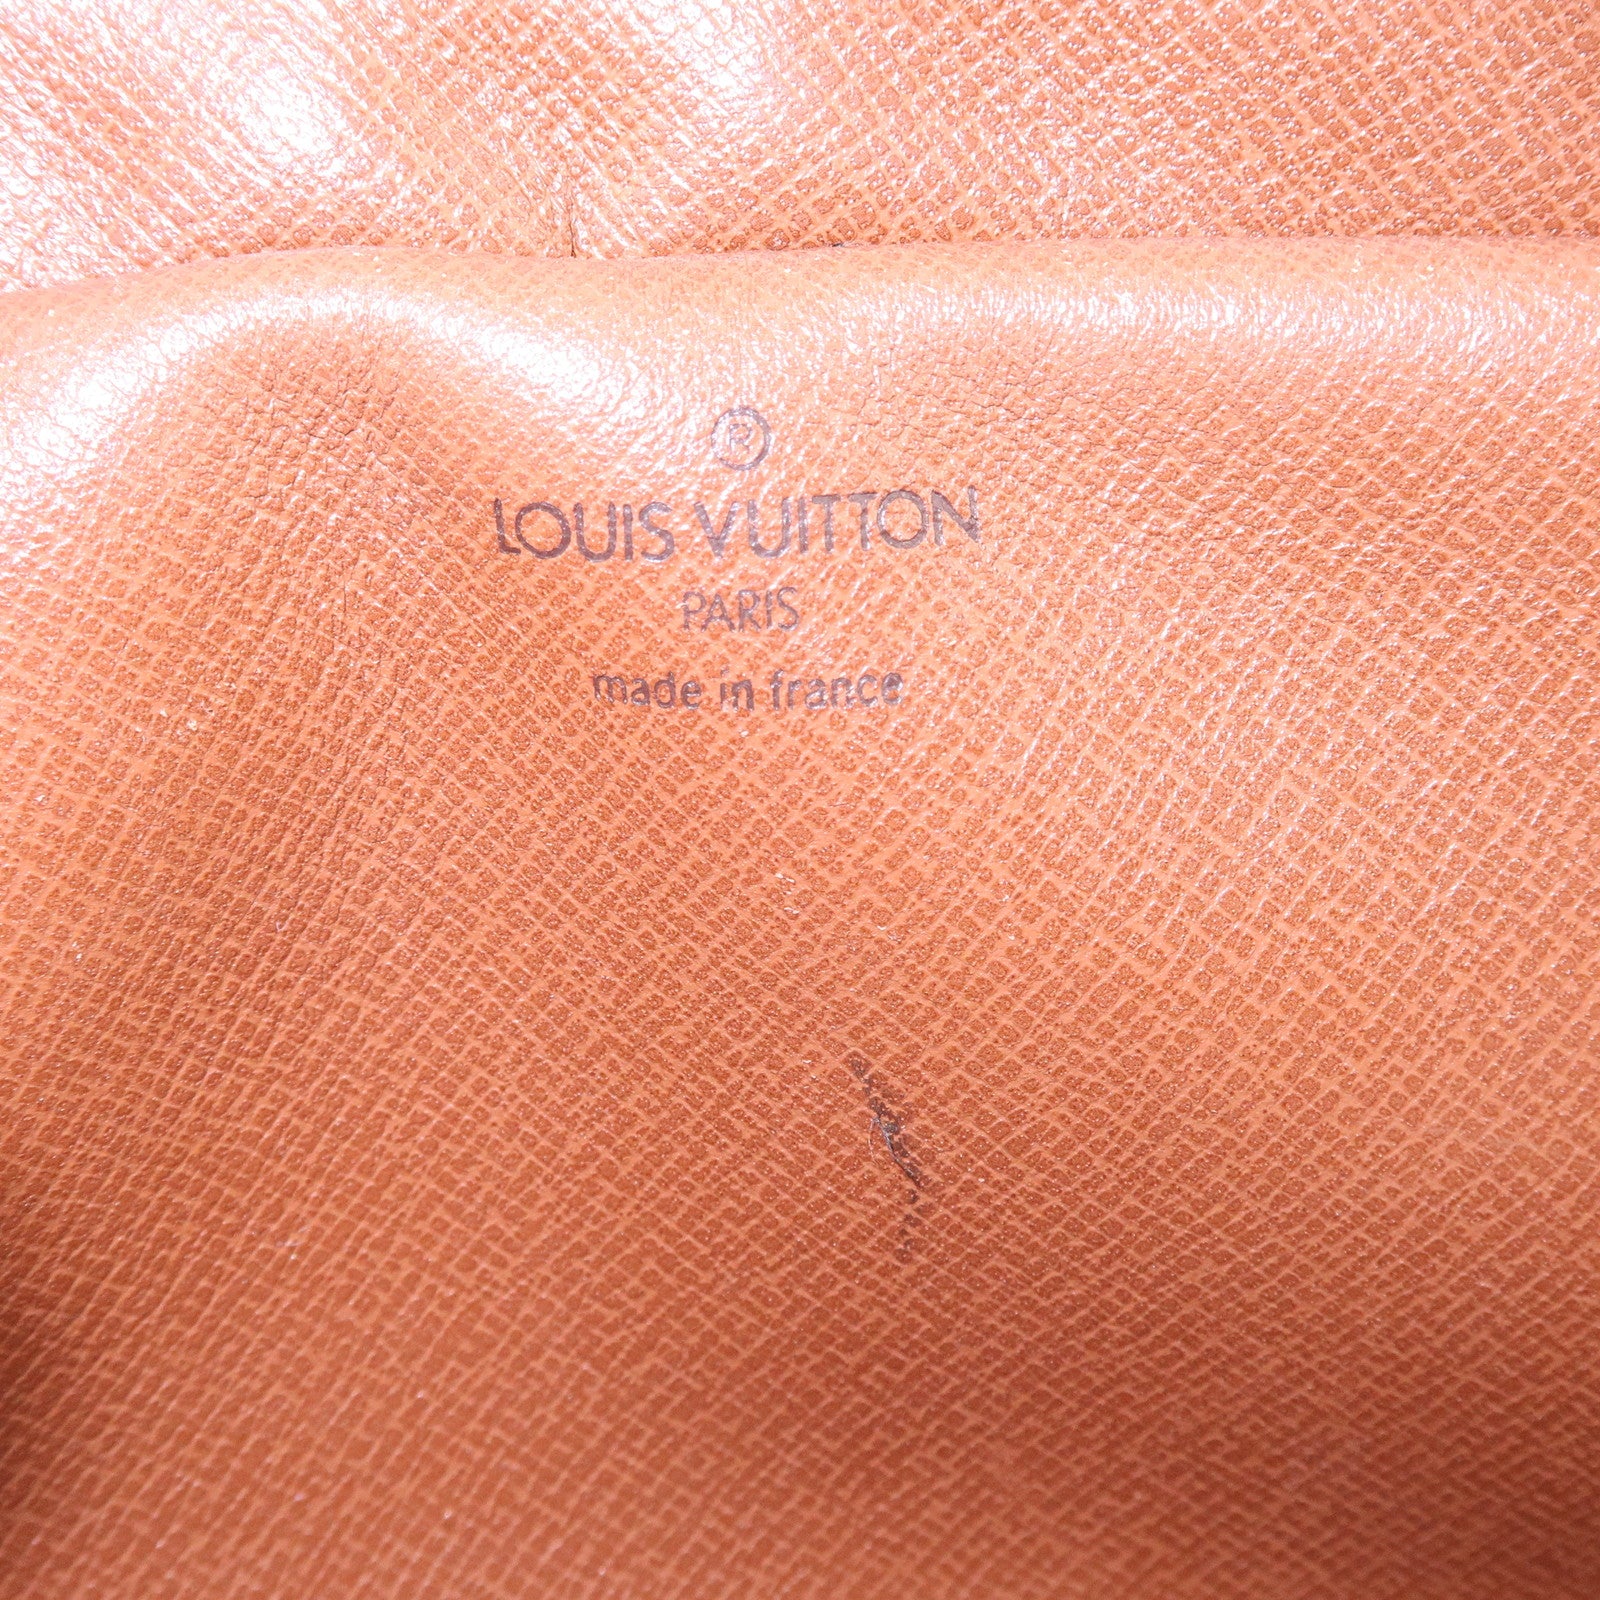 Monogram Saint Germain 24 Shoulder Bag Luxury Designer By Louis Vuitto